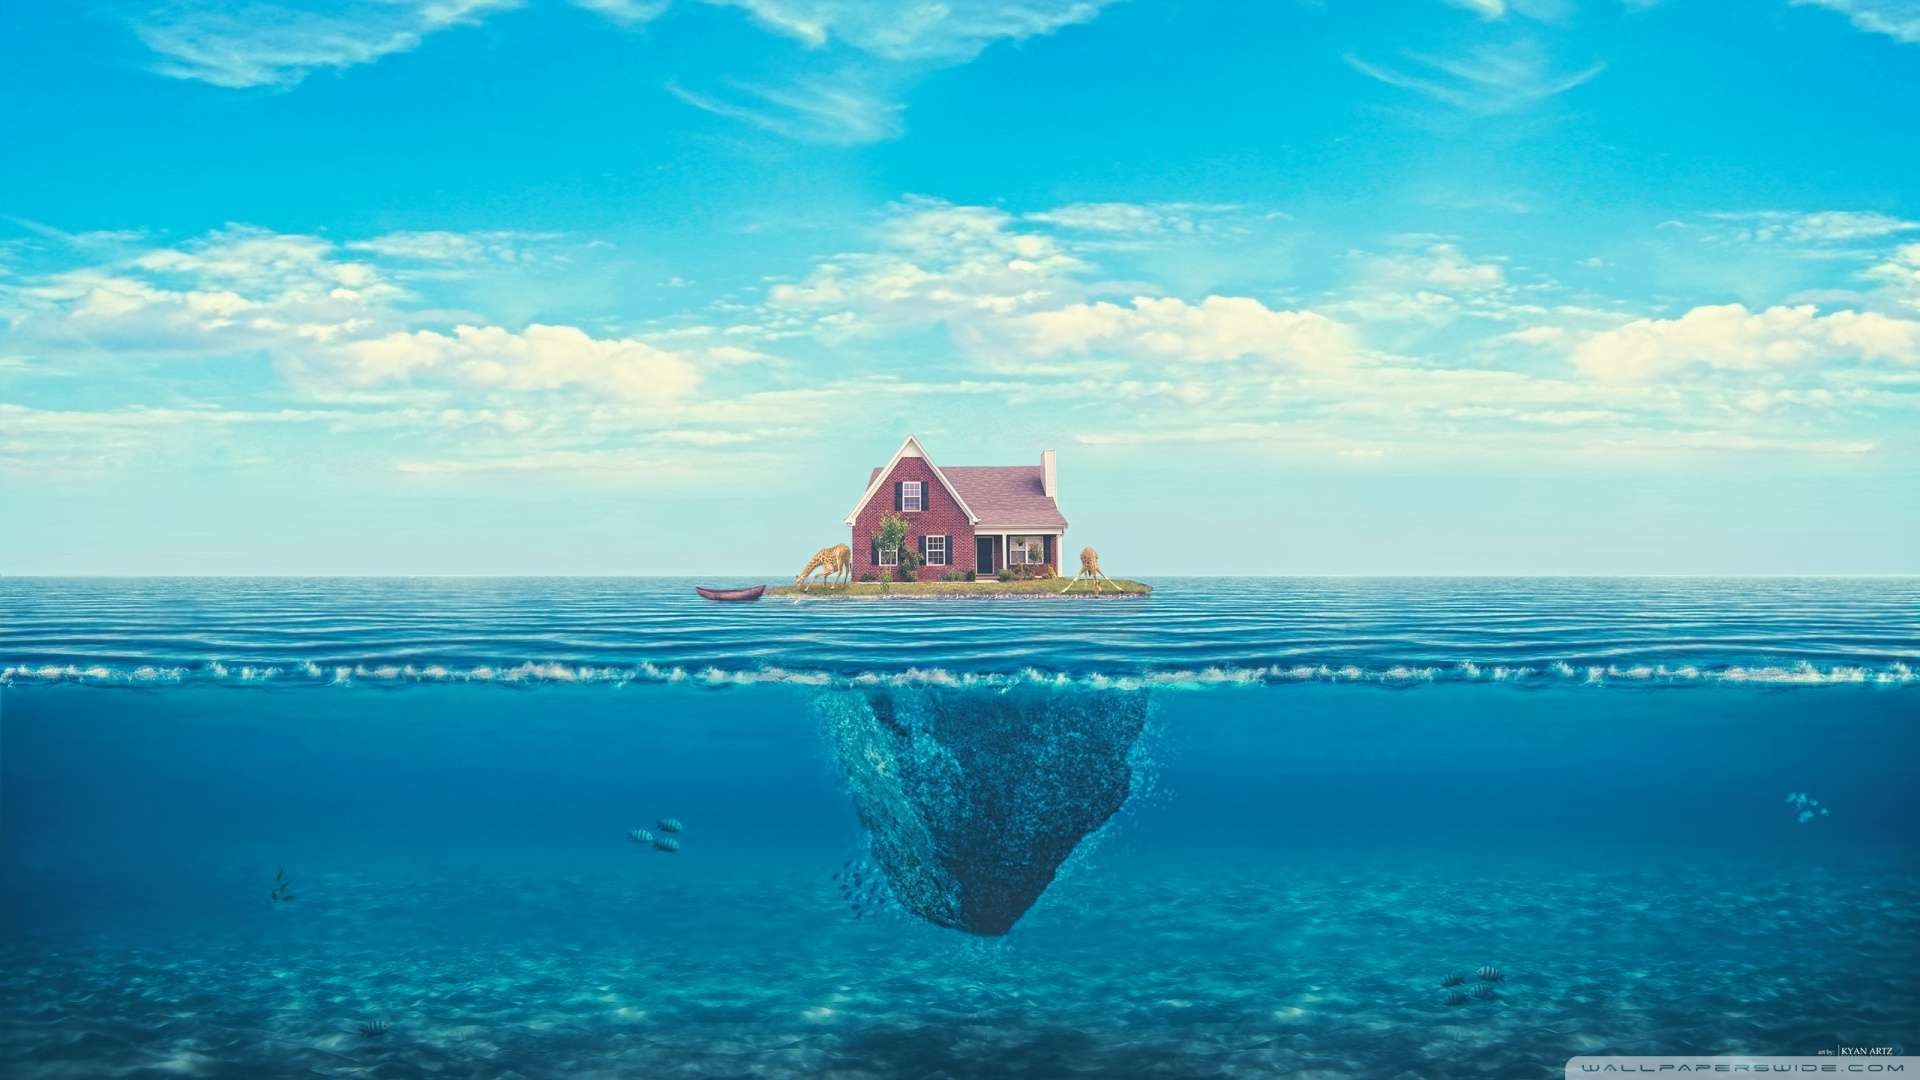 1920x1080 Wallpaper: House On The Ocean Wallpaper 1080p HD. Upload at December .